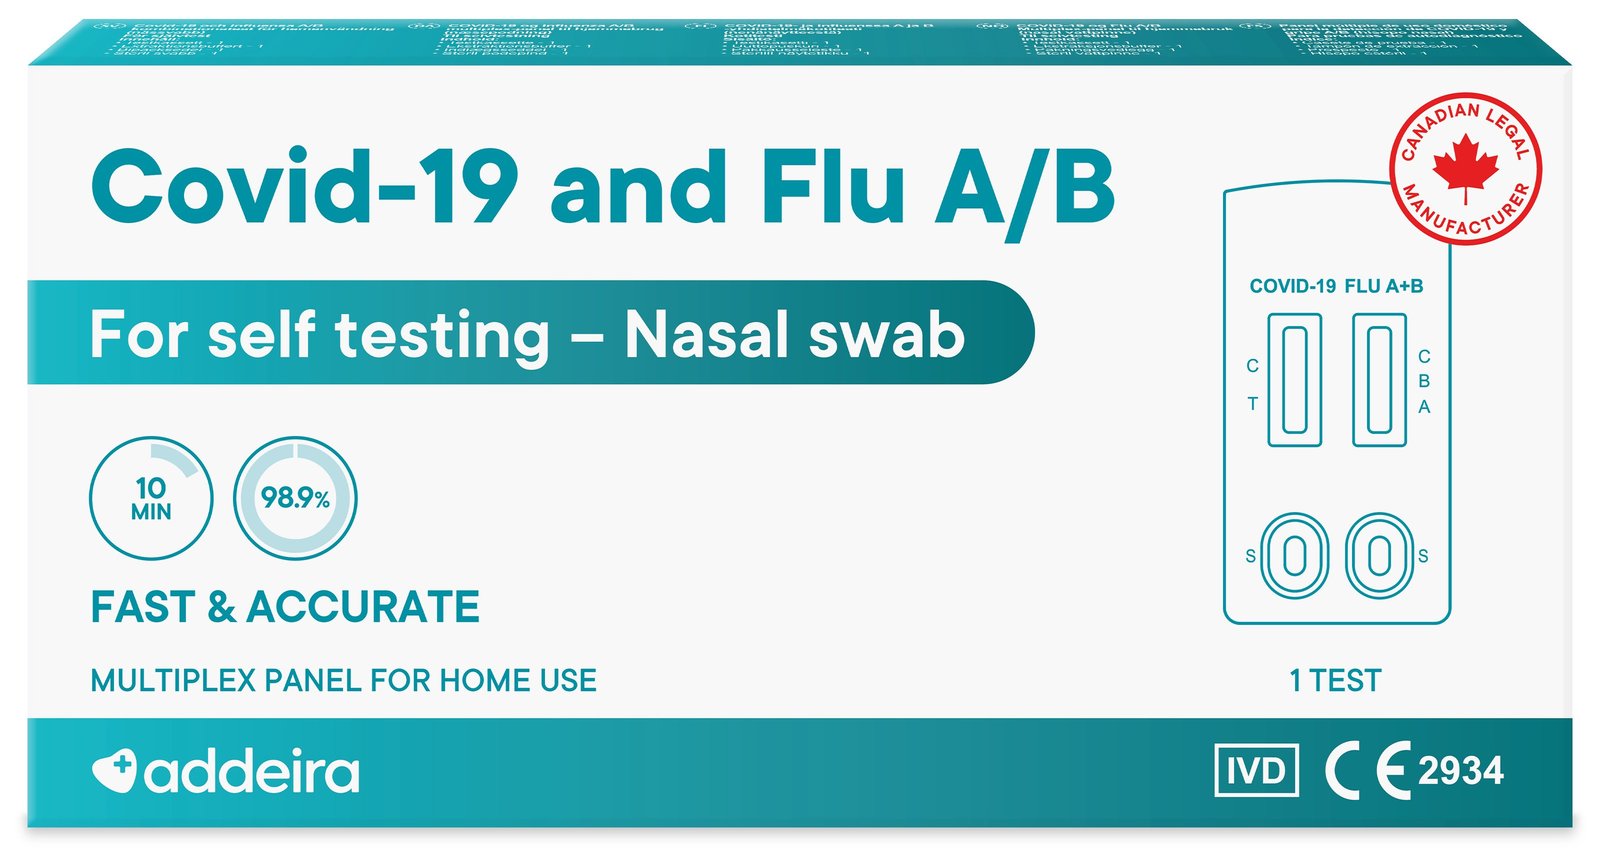 addeira Covid-19 + Influensa A/B Test 1 st